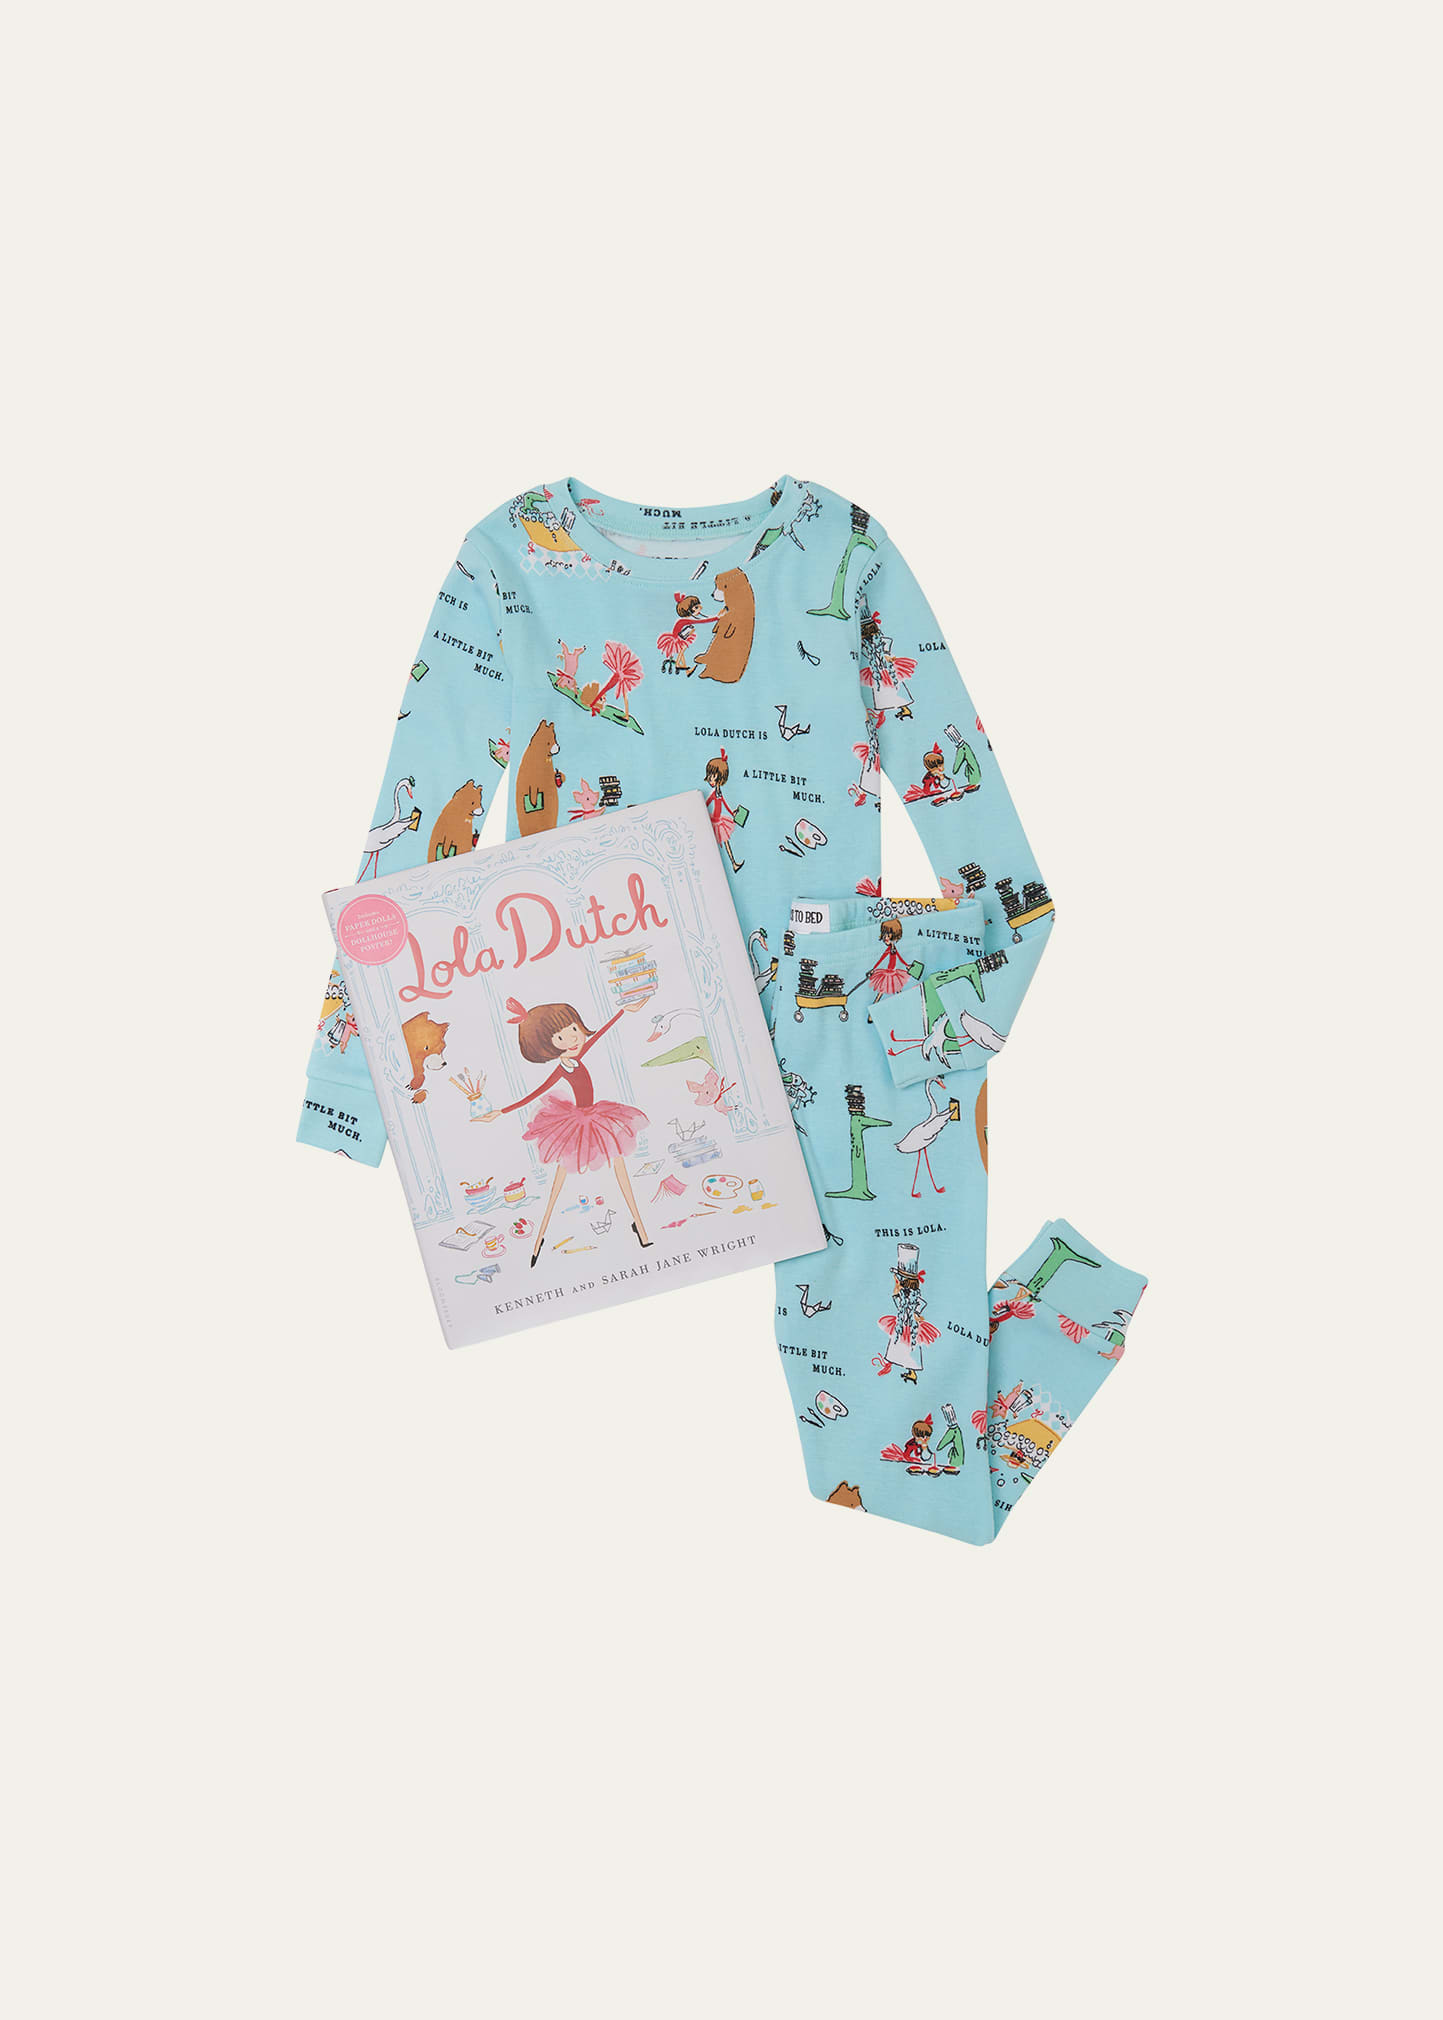 Books To Bed Kid's Lola Dutch Printed Pajama Gift Set, Size 2-8